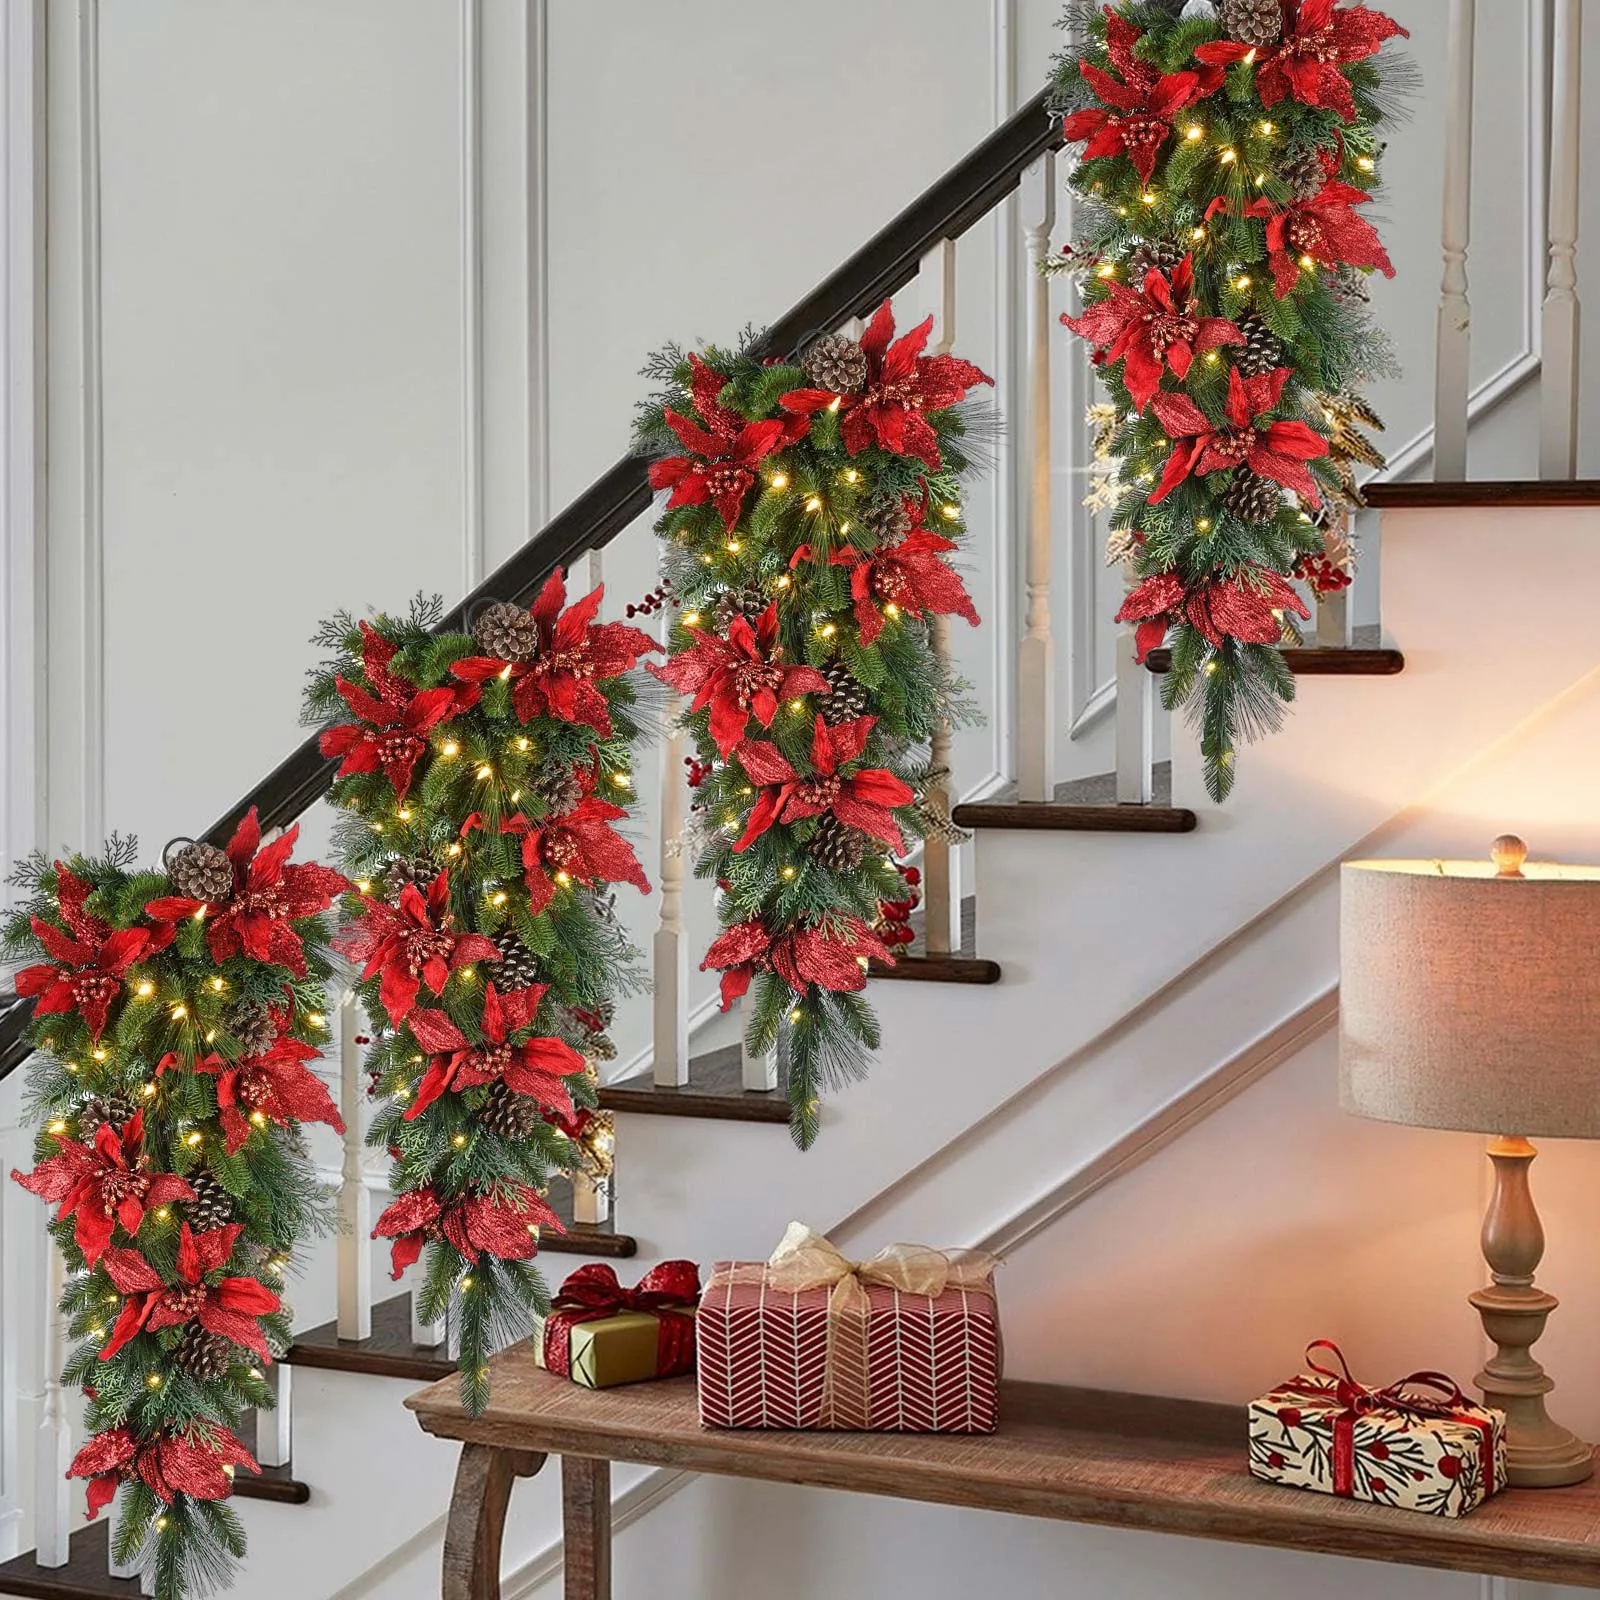 Decorazione per scale senza fili, ghirlanda natalizia per porta d'ingresso,  decorazione per finestre da parete